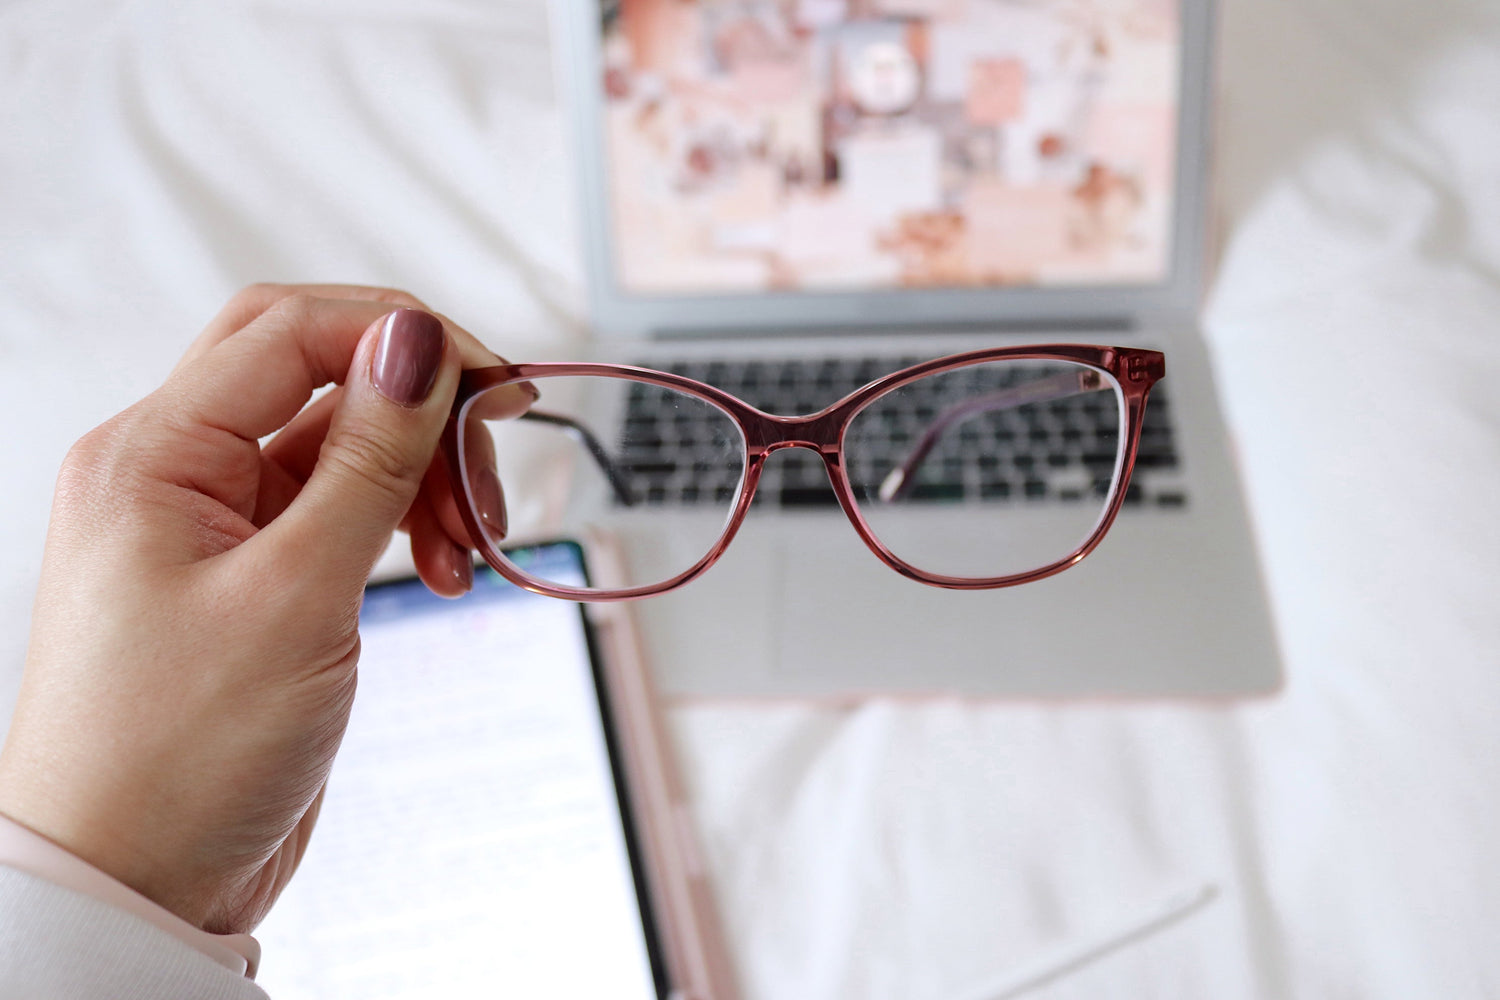 does wearing glasses change the shape of your face? | KOALAEYE OPTICAL